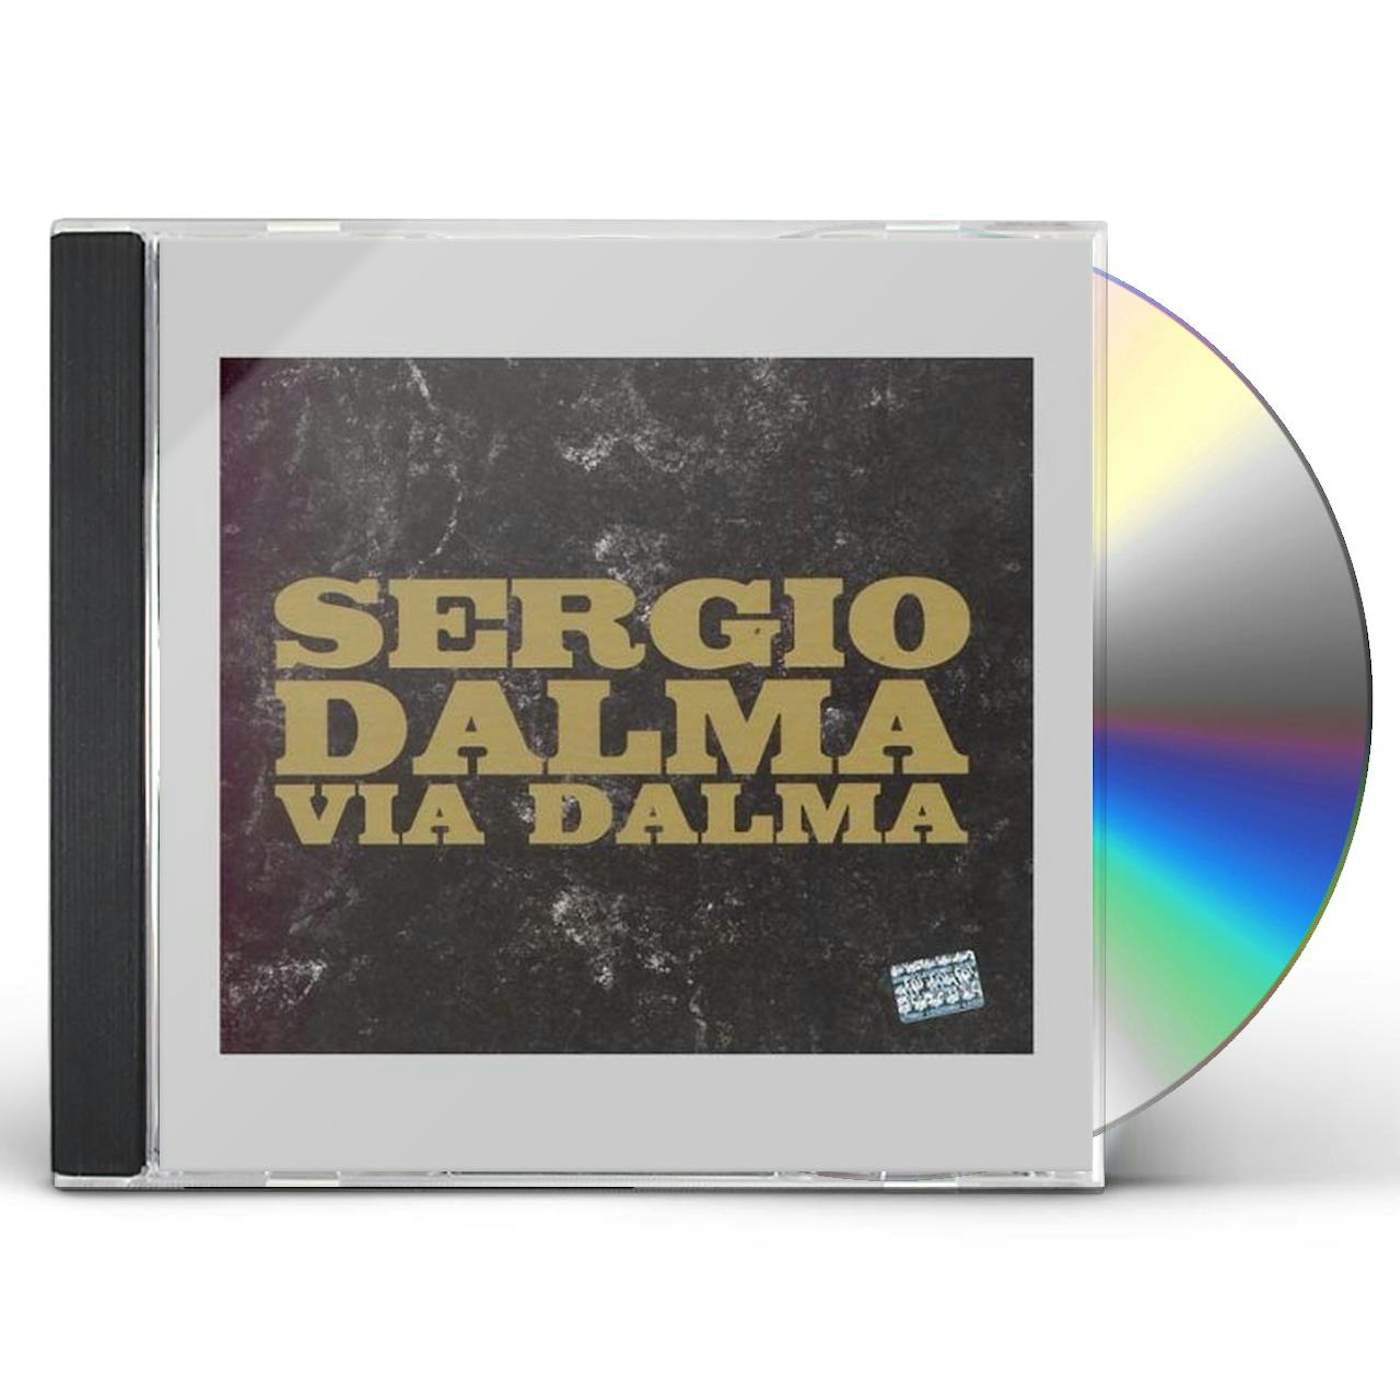 Sergio Dalma TODO VIA DALMA CD